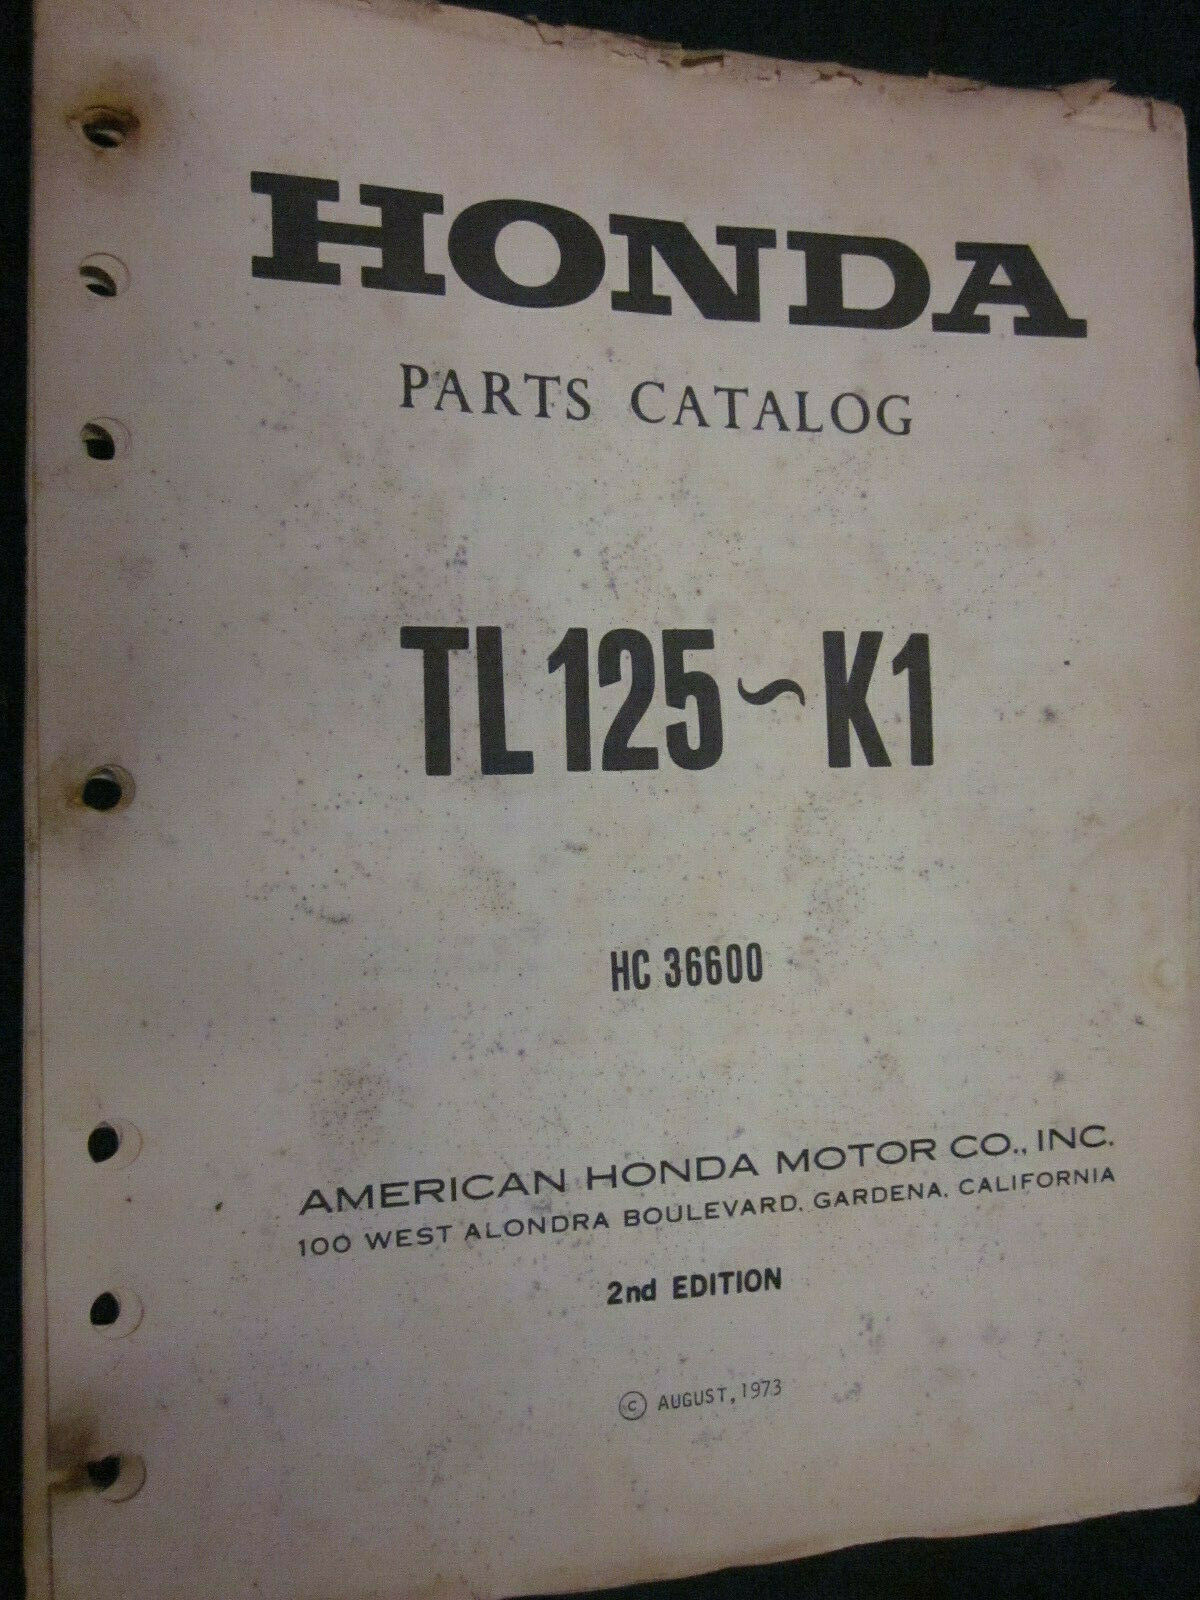 Vintage Honda Parts Book For Tl125-k1 Hc36600 2nd Edition Published Aug. '73